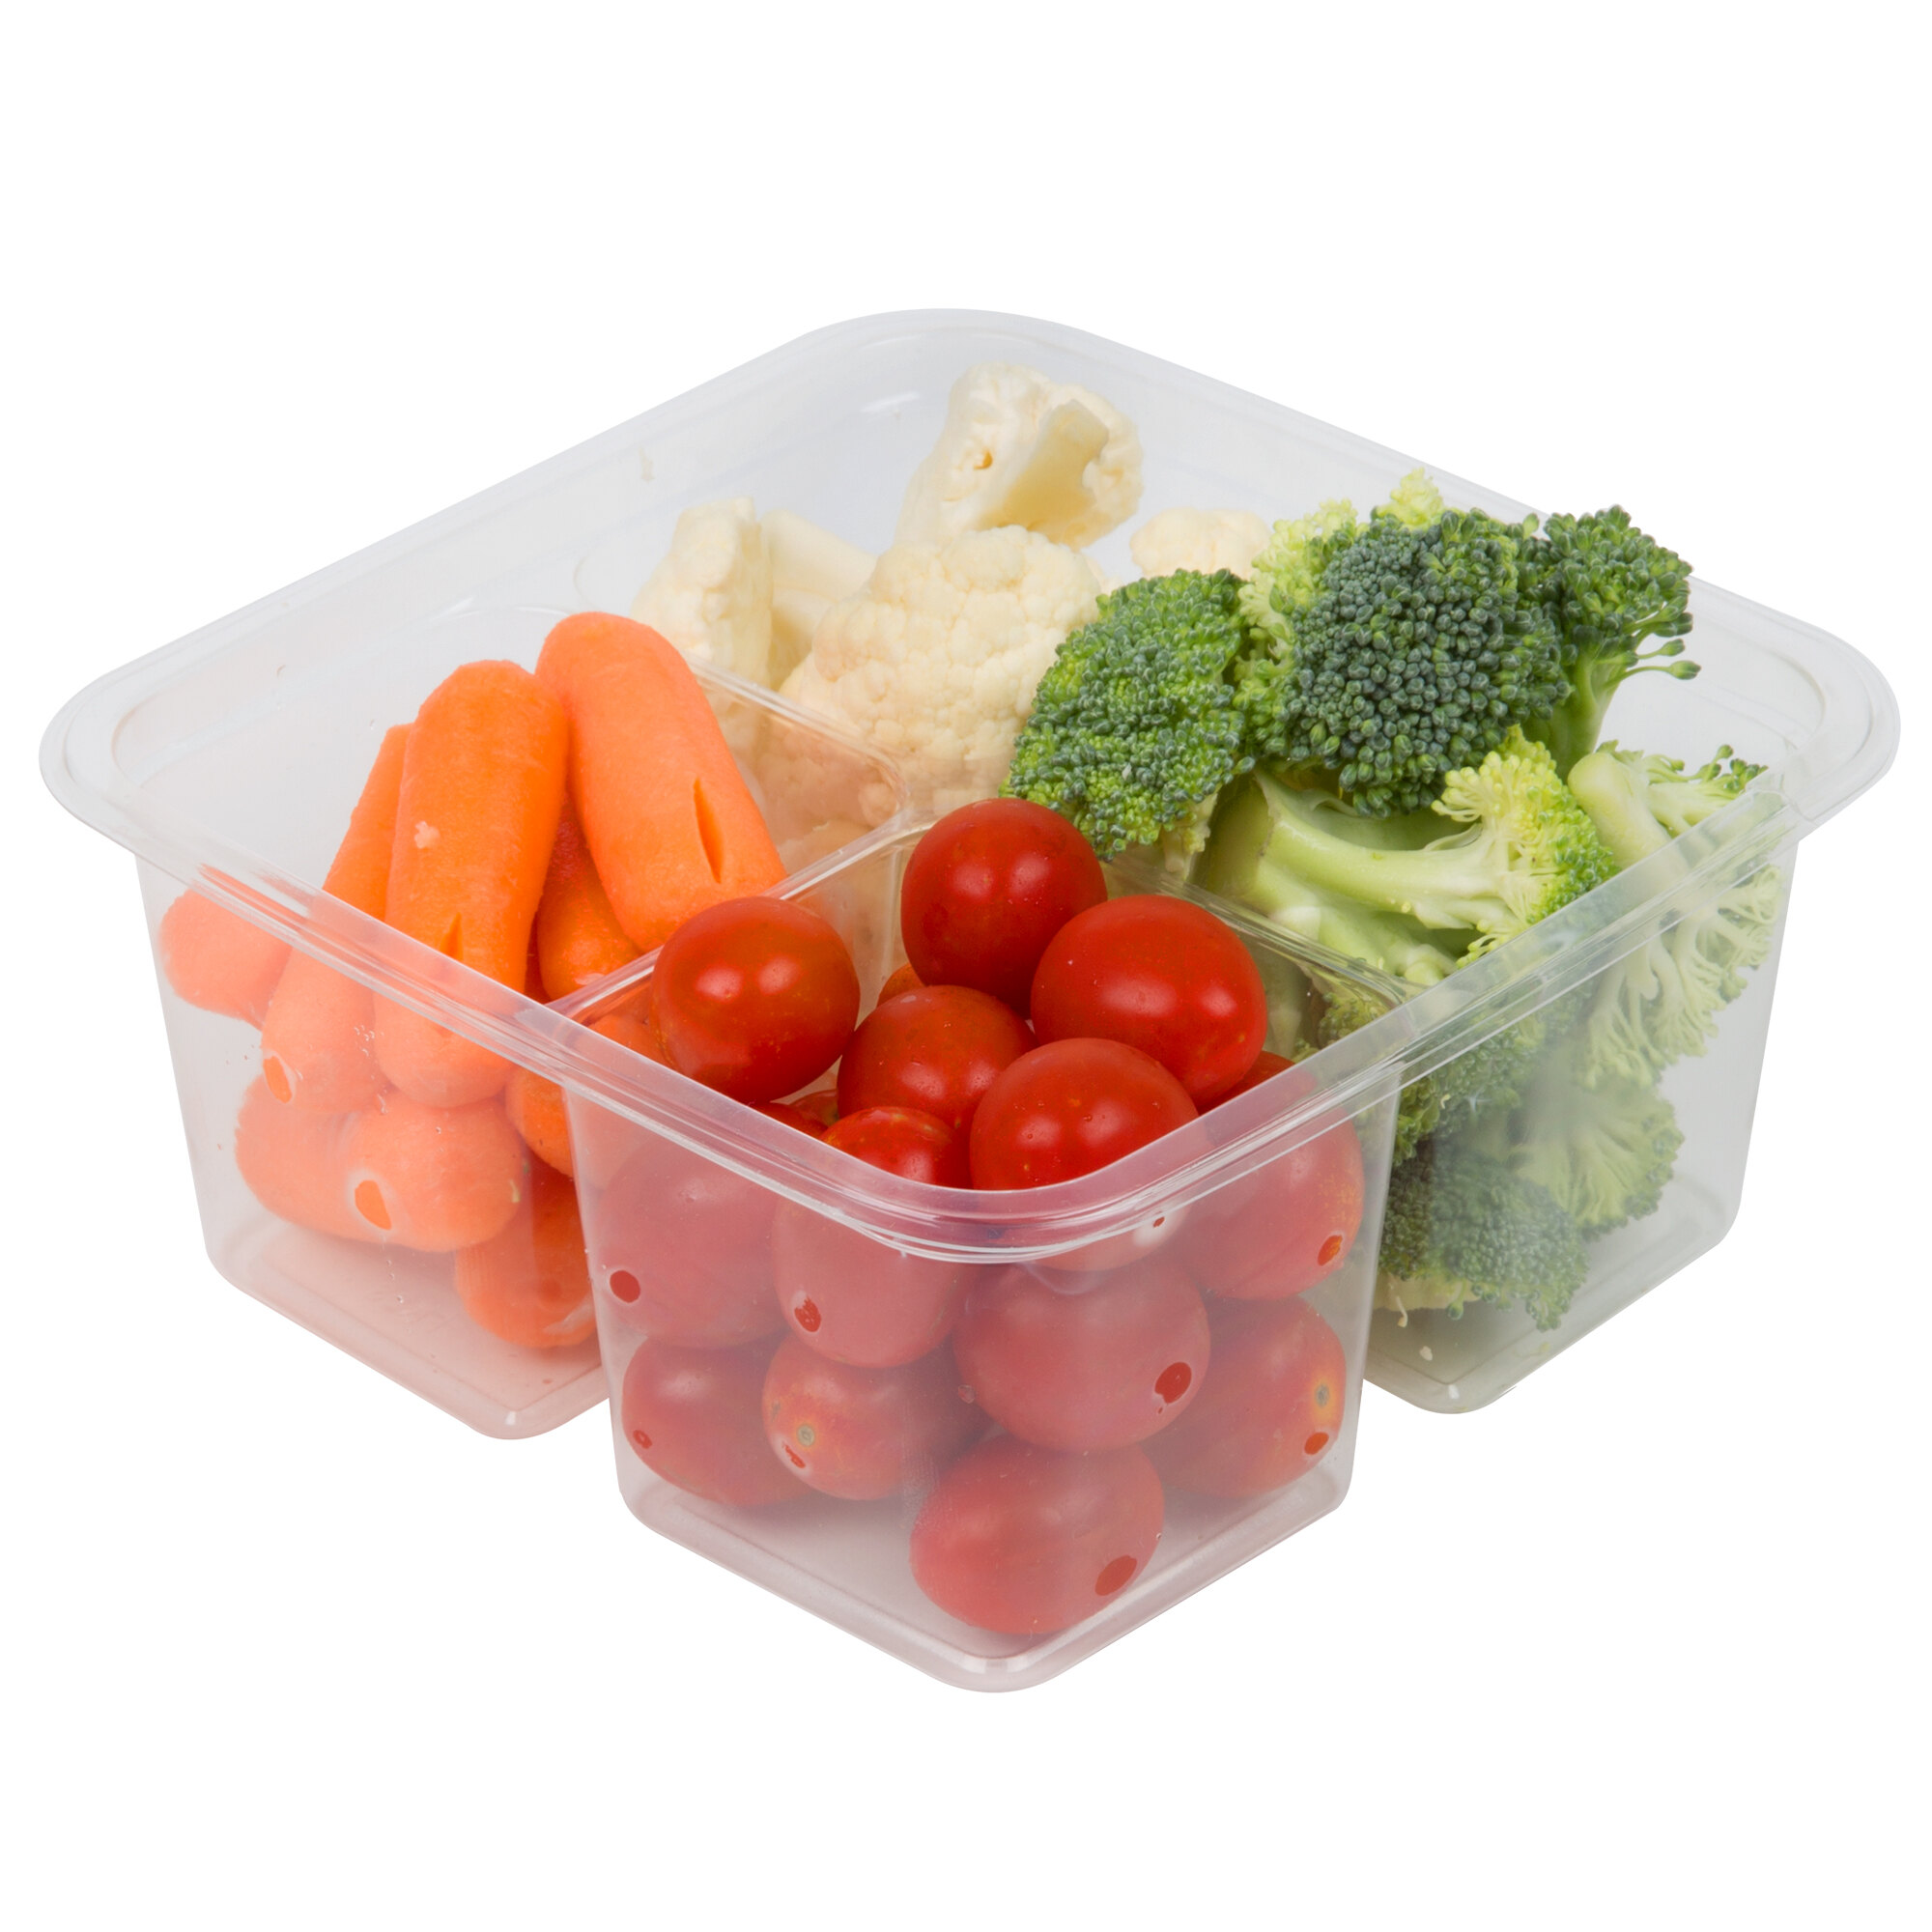 Очищенные овощи хранят. Контейнер для овощей. Лоток для овощей. Овощи и фрукты в контейнерах. Контейнер под овощи.